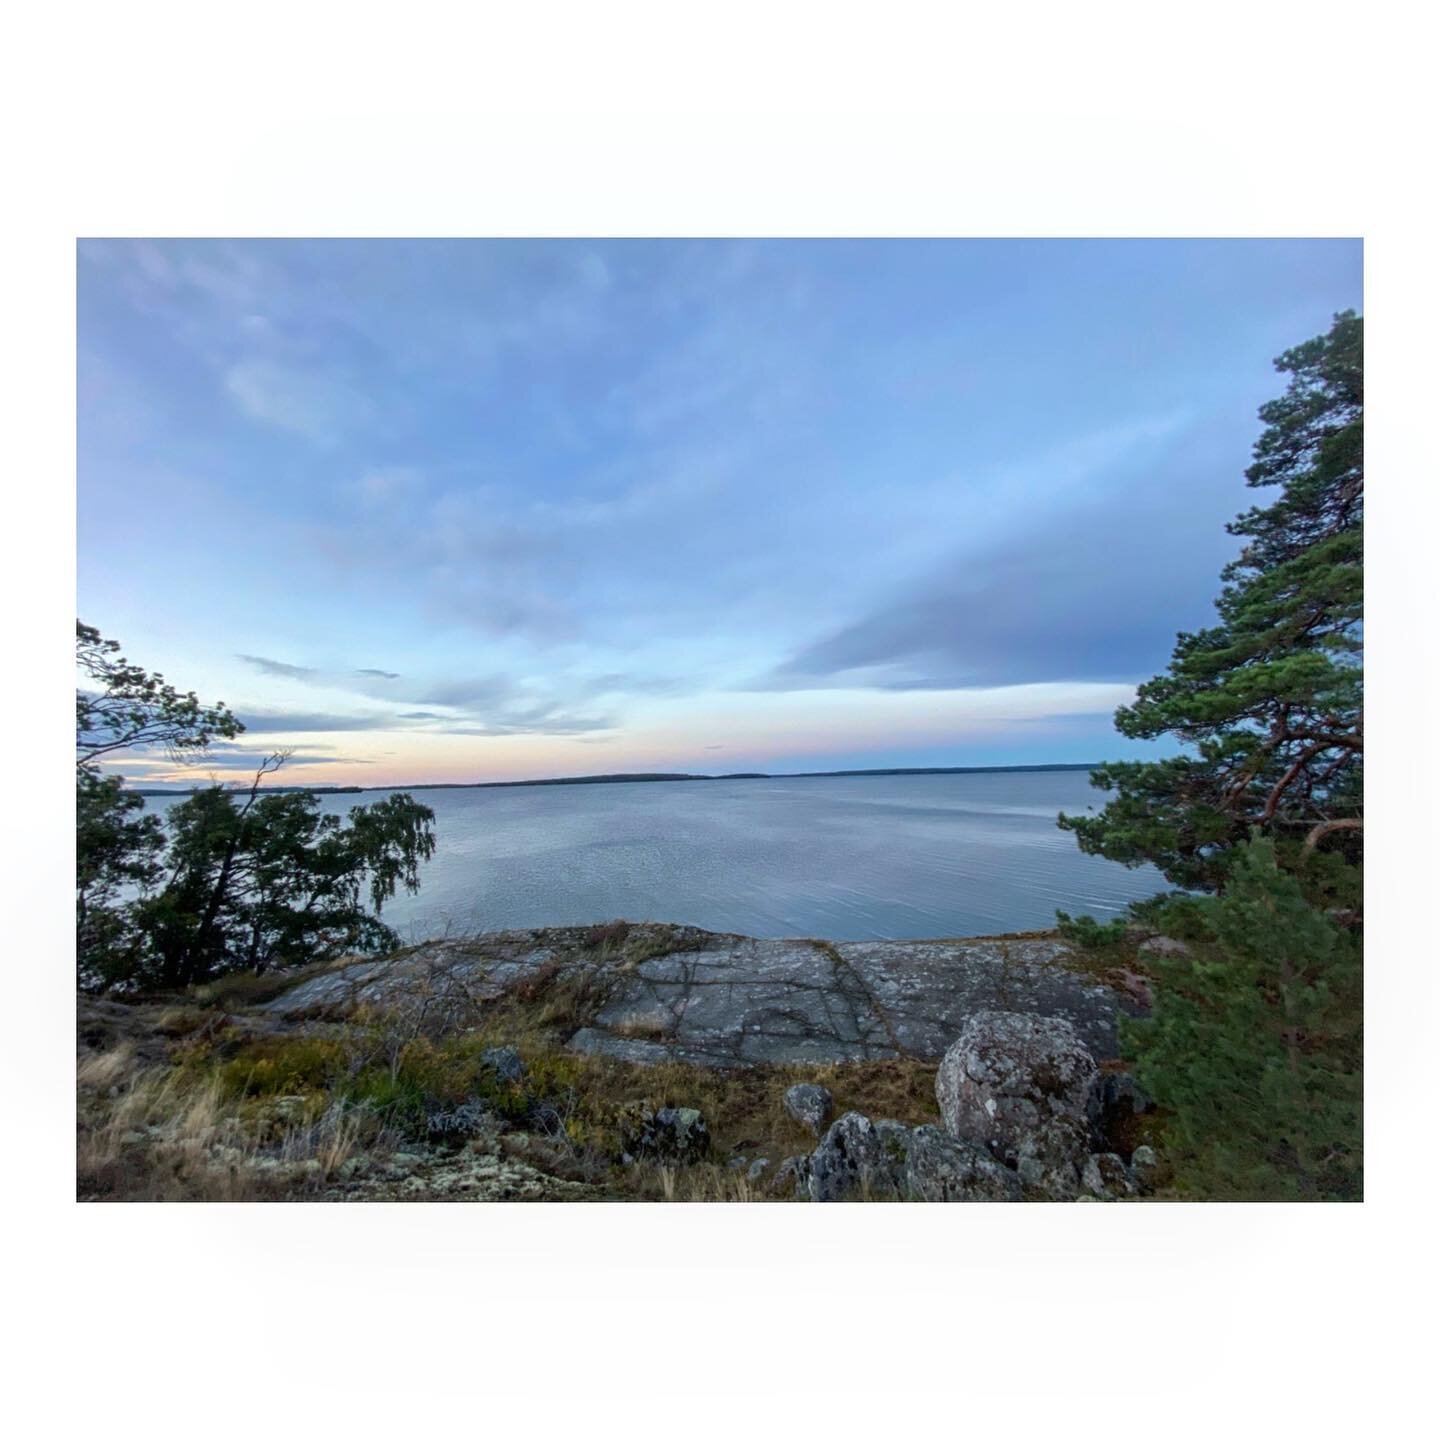 Island sunset #swedishnature #boatlife #newera